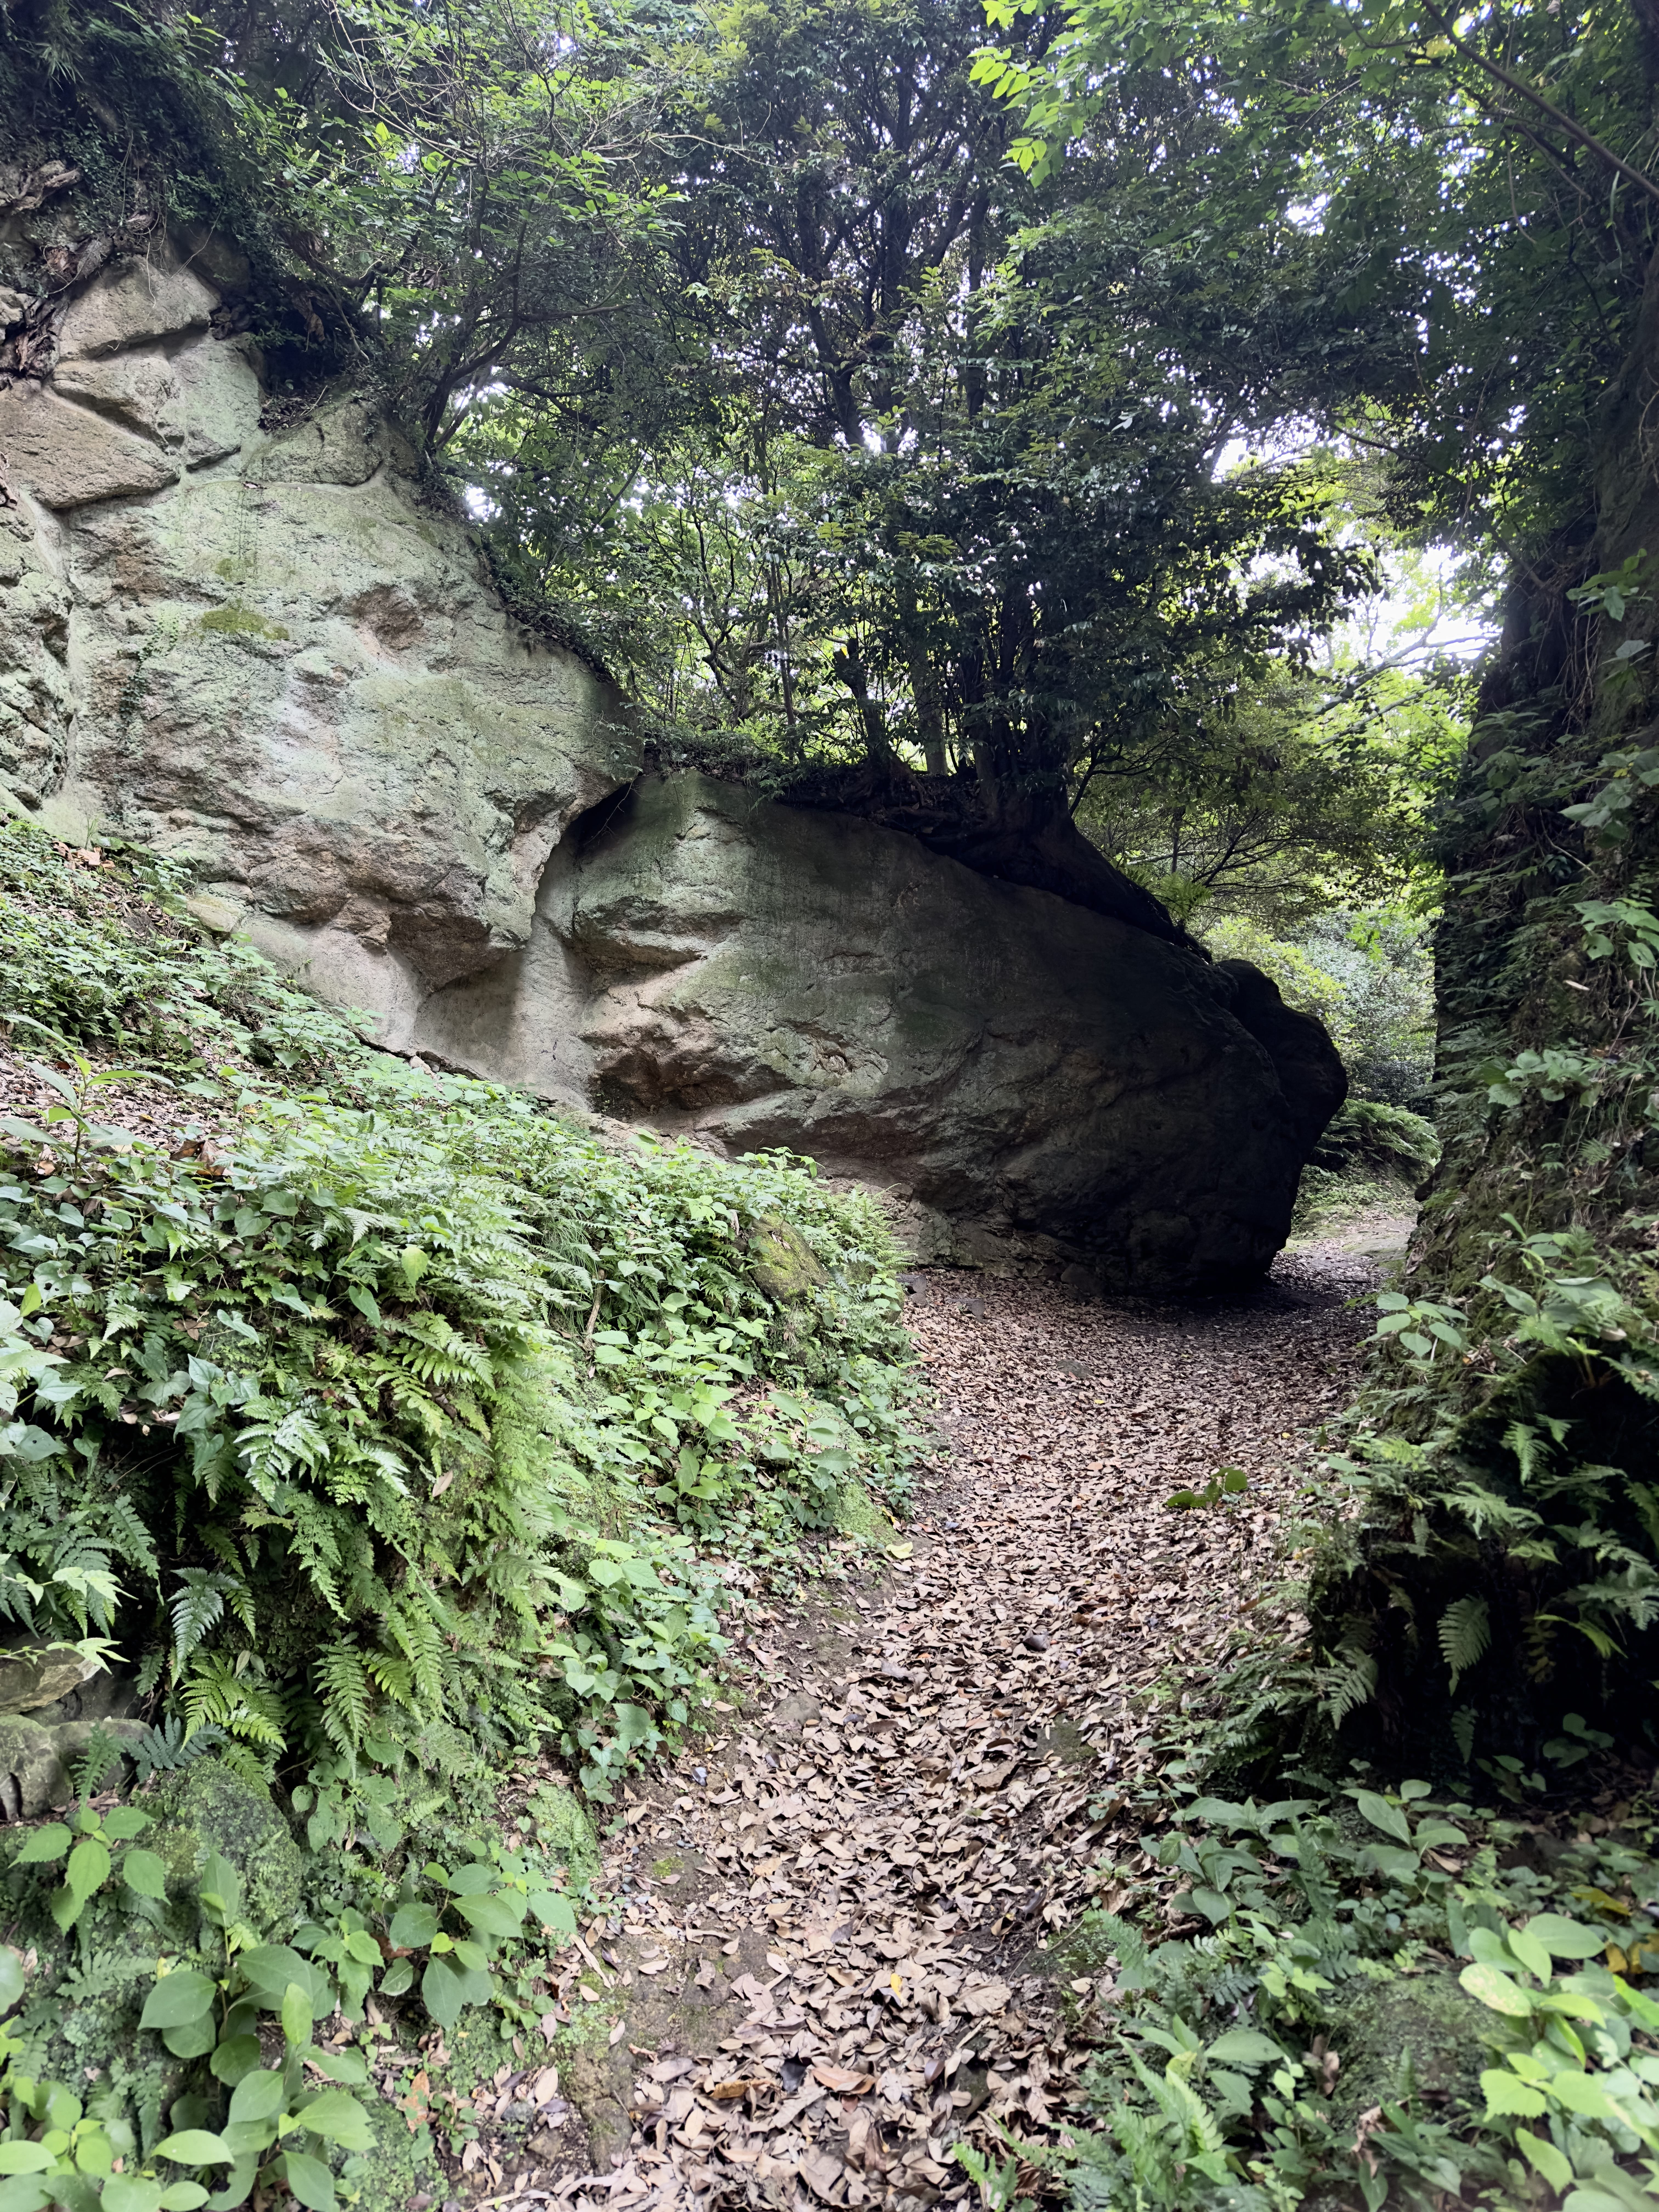 The Nagoe Kiridoshi near Zushi, Japan, is one of the seven ancient passes cut into the mountains surrounding Kamakura.